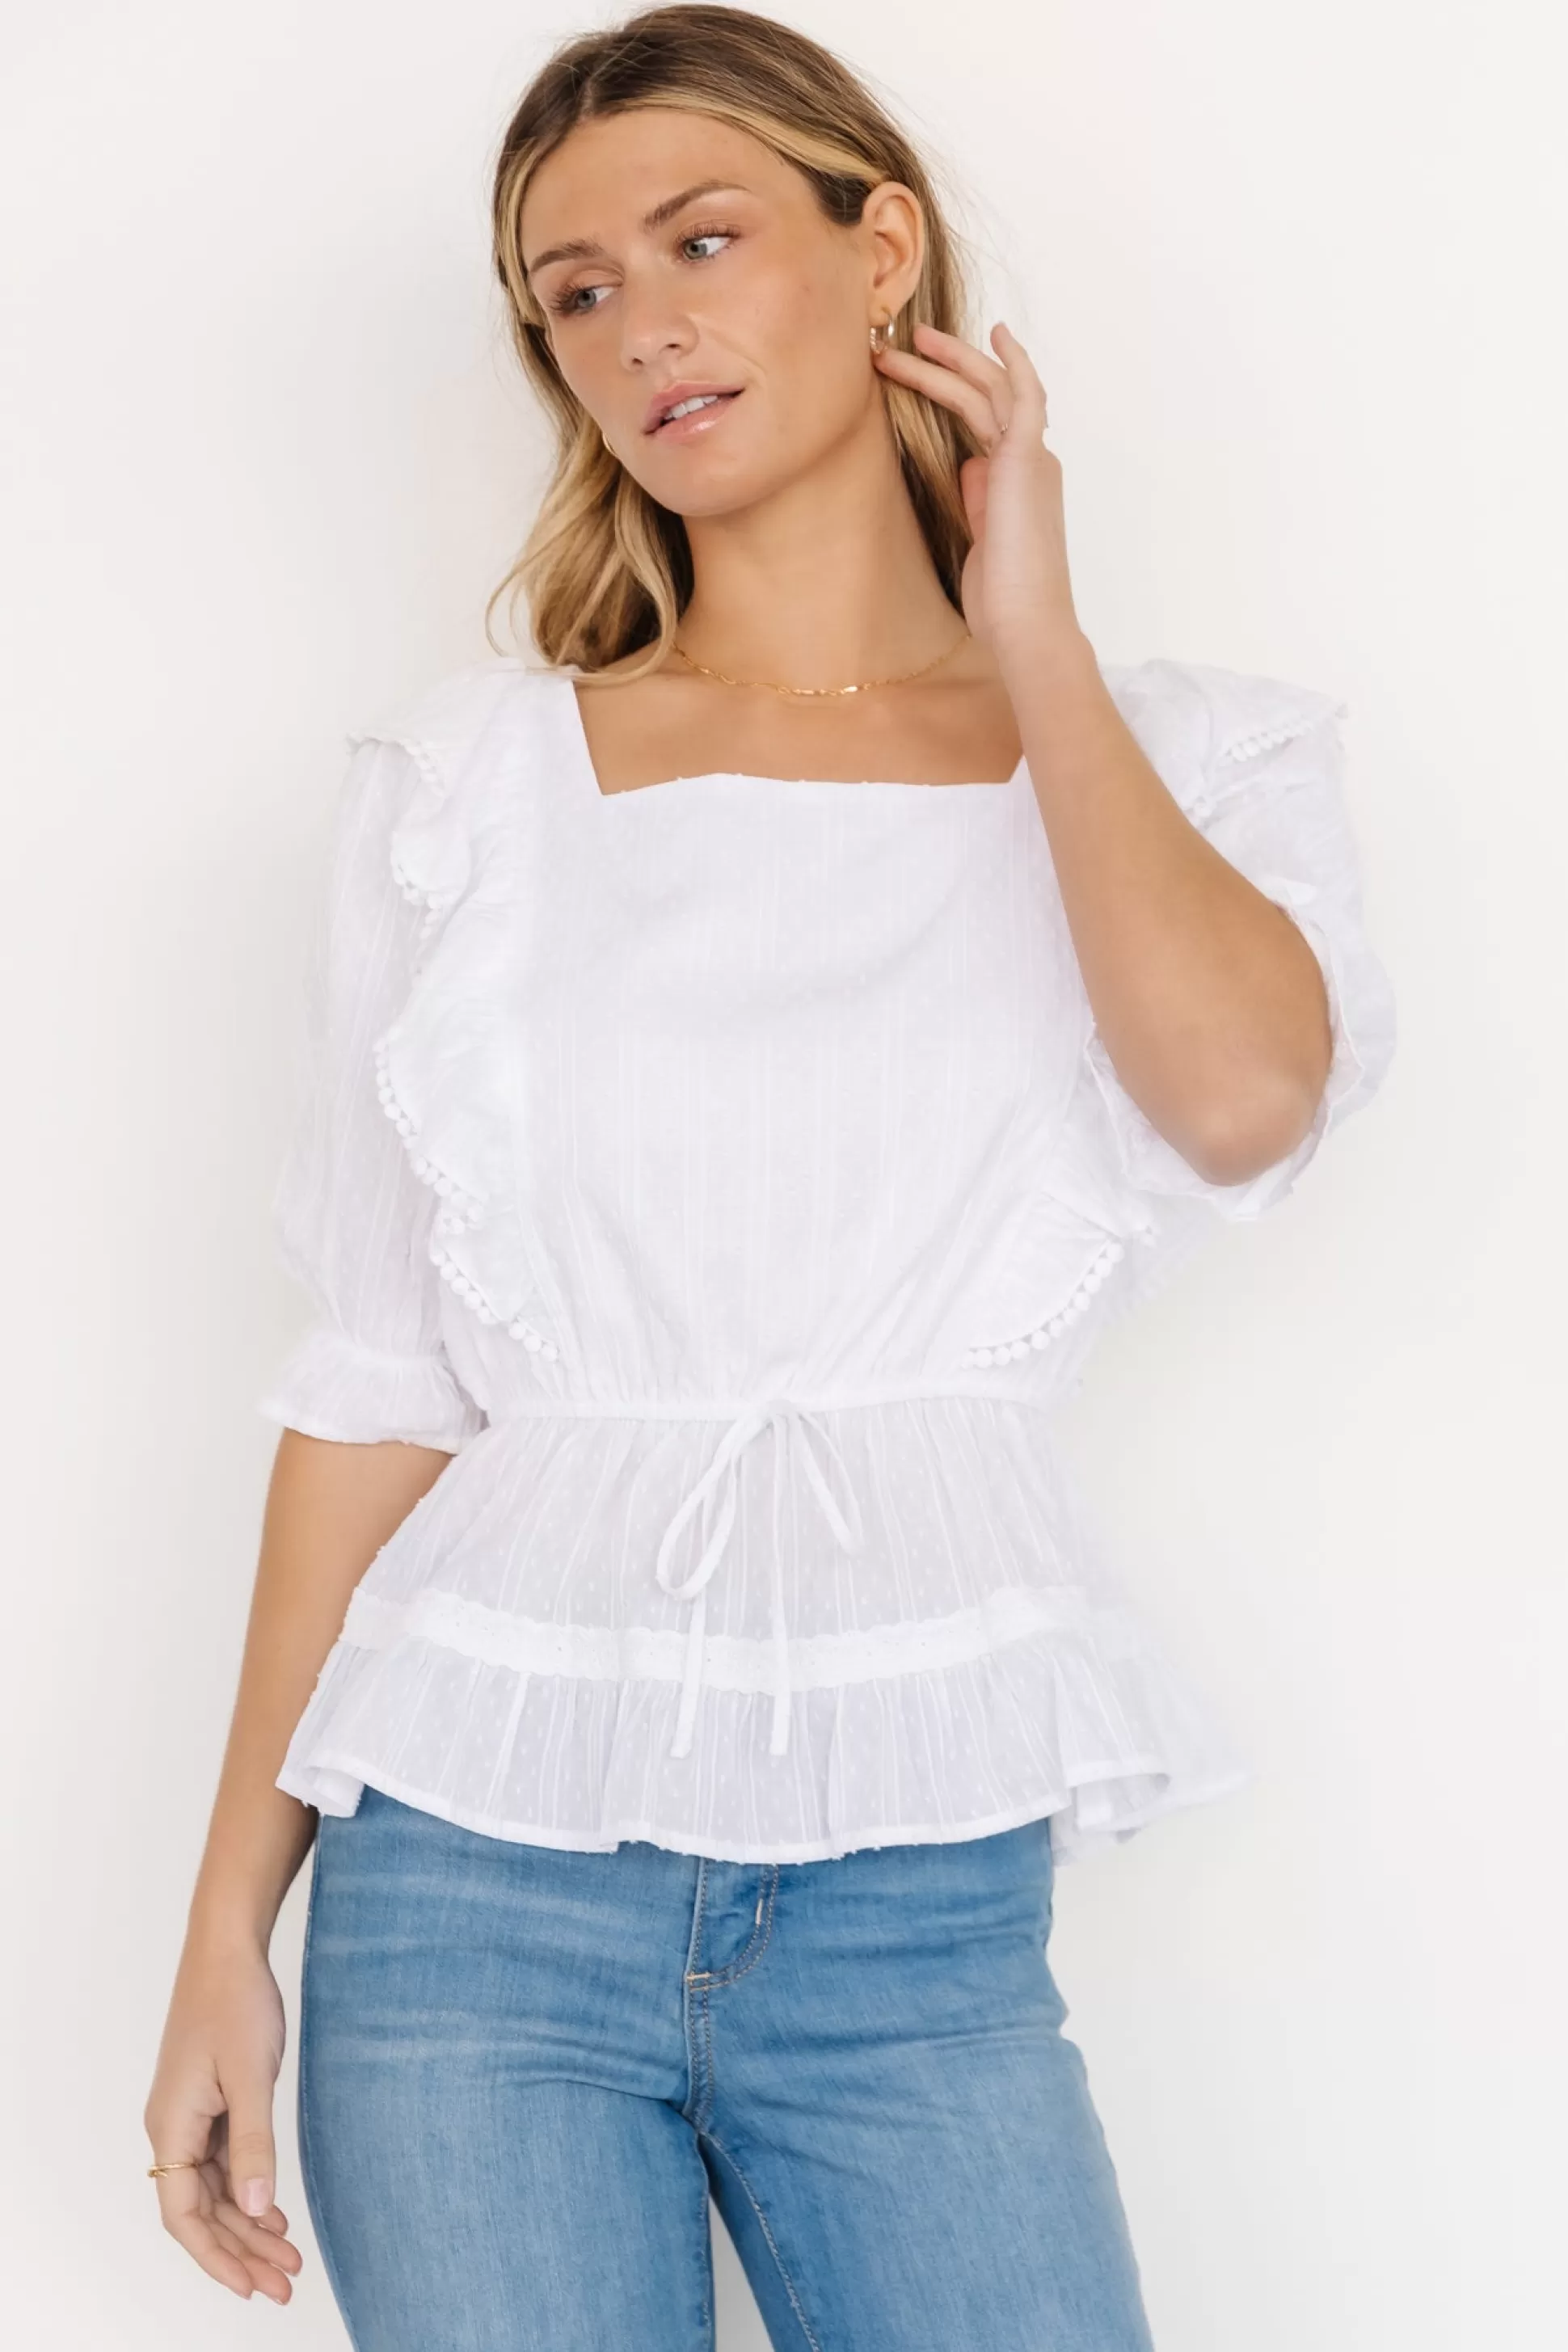 blouses + shirts | Baltic Born Adley Ruffle Top | White